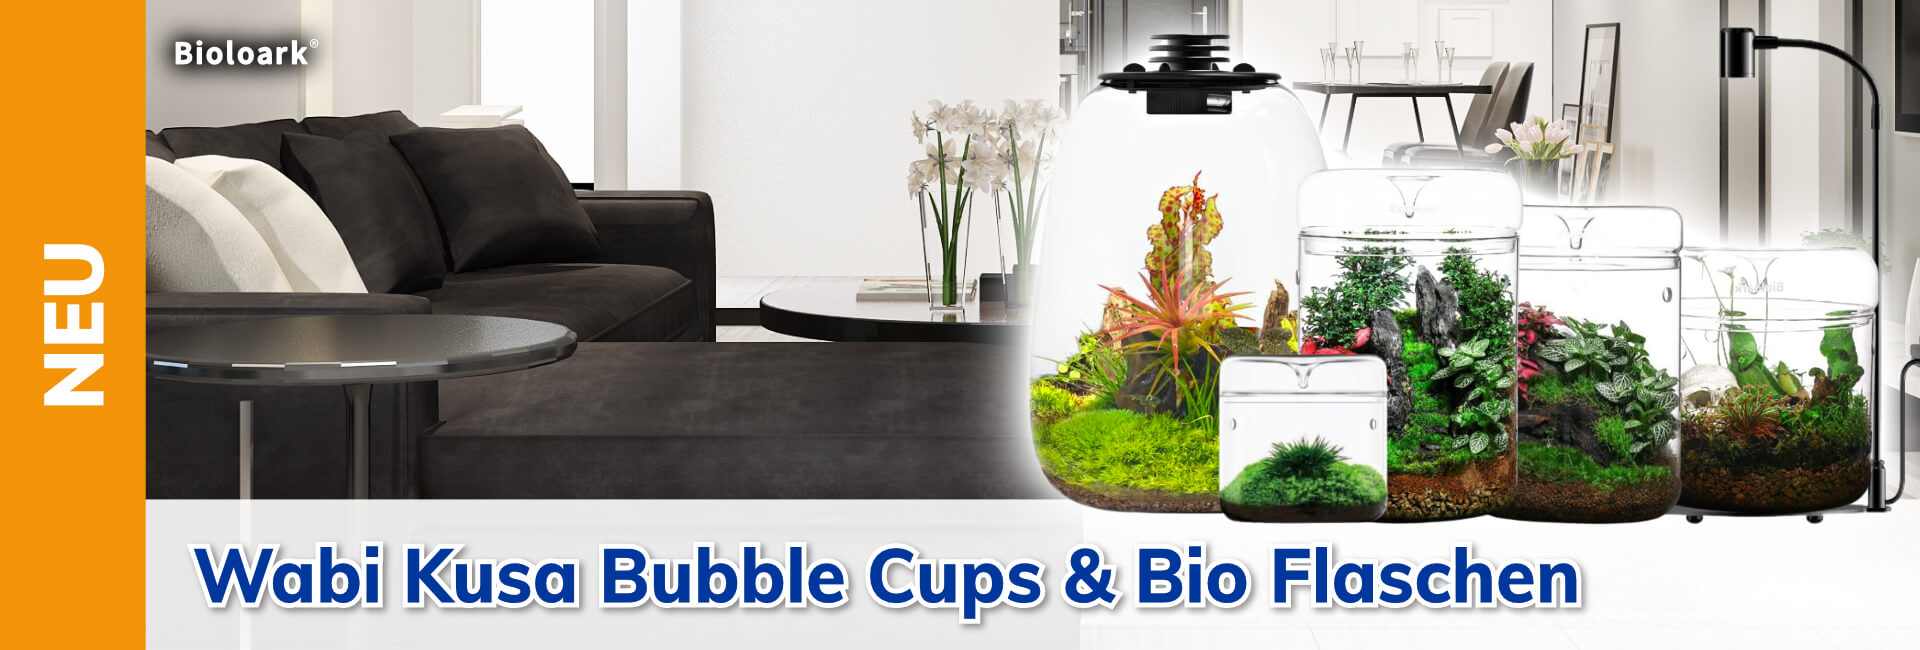 Bioloark Wabi-Kusa Bubble Cups & Bio Flaschen